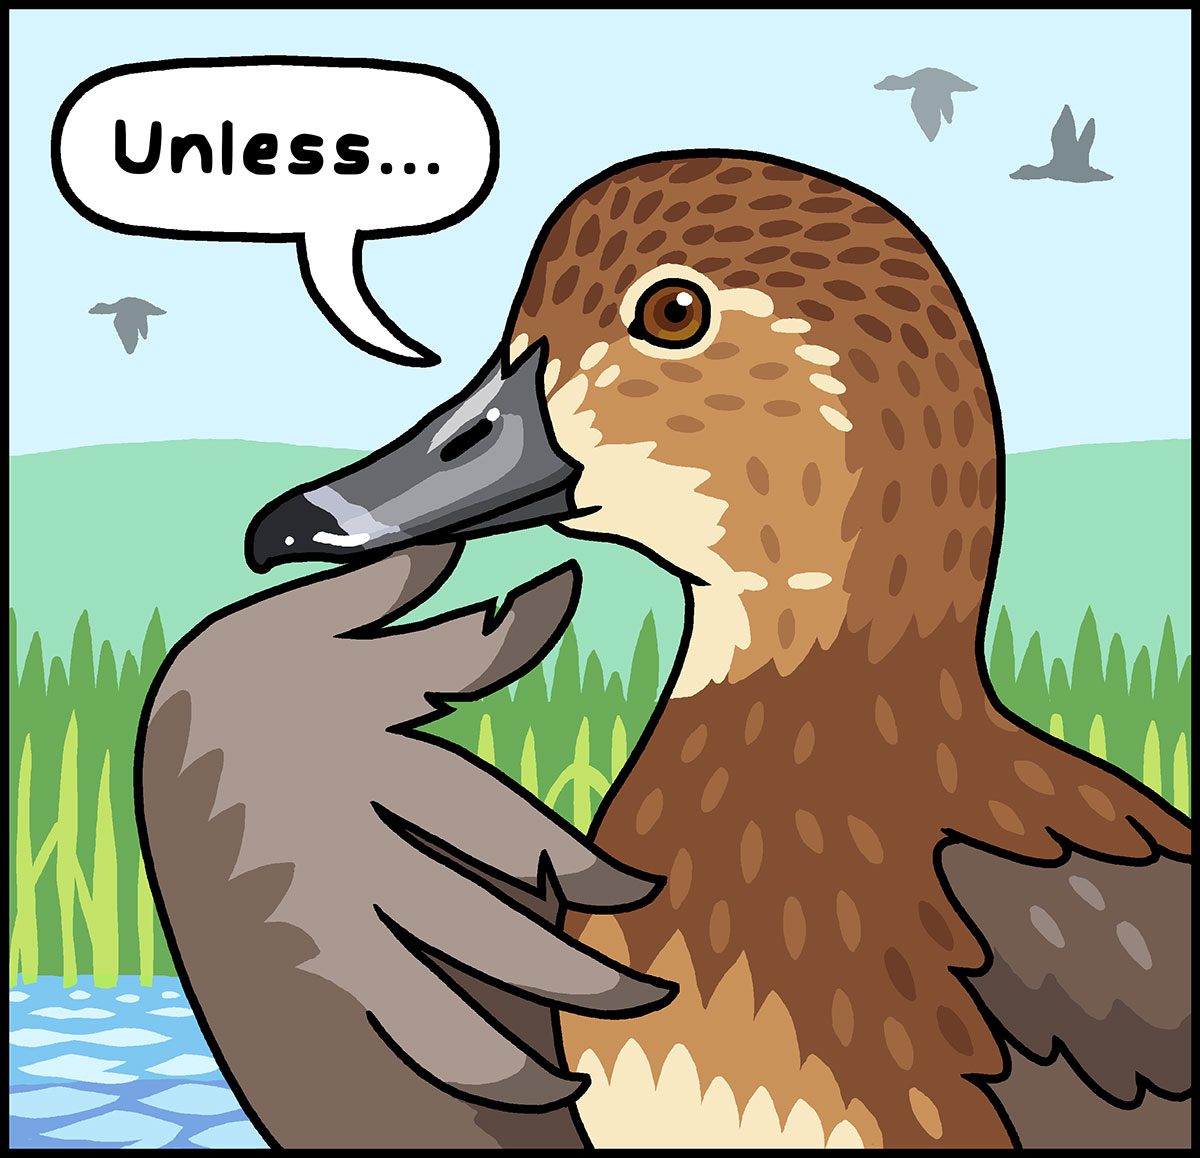 Cartoon of duck thinking "Unless..."